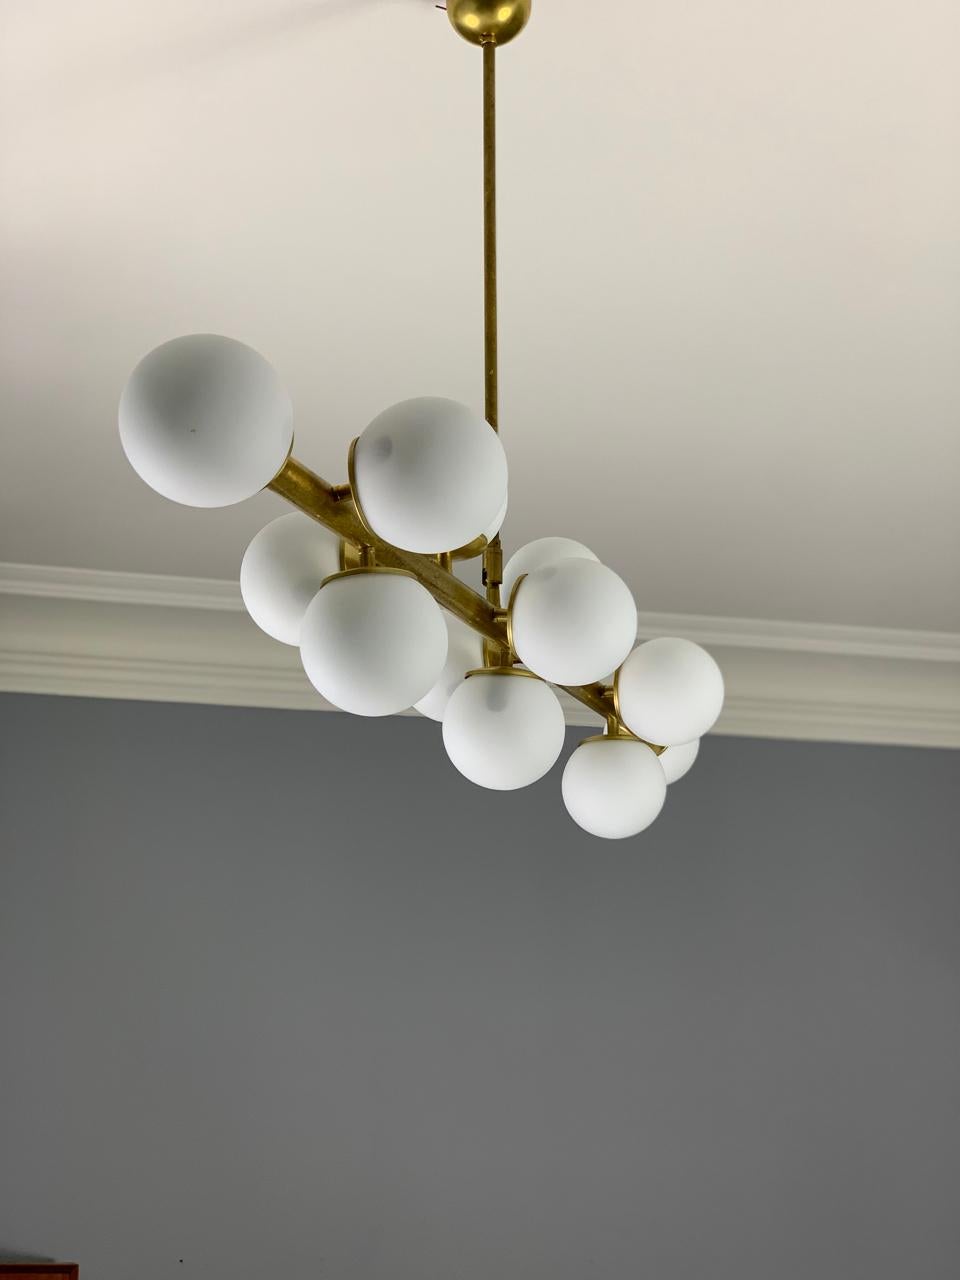 20th Century Italian Bubble Ceiling Lamp in Brass & Opal 50s Stilnovo Style For Sale